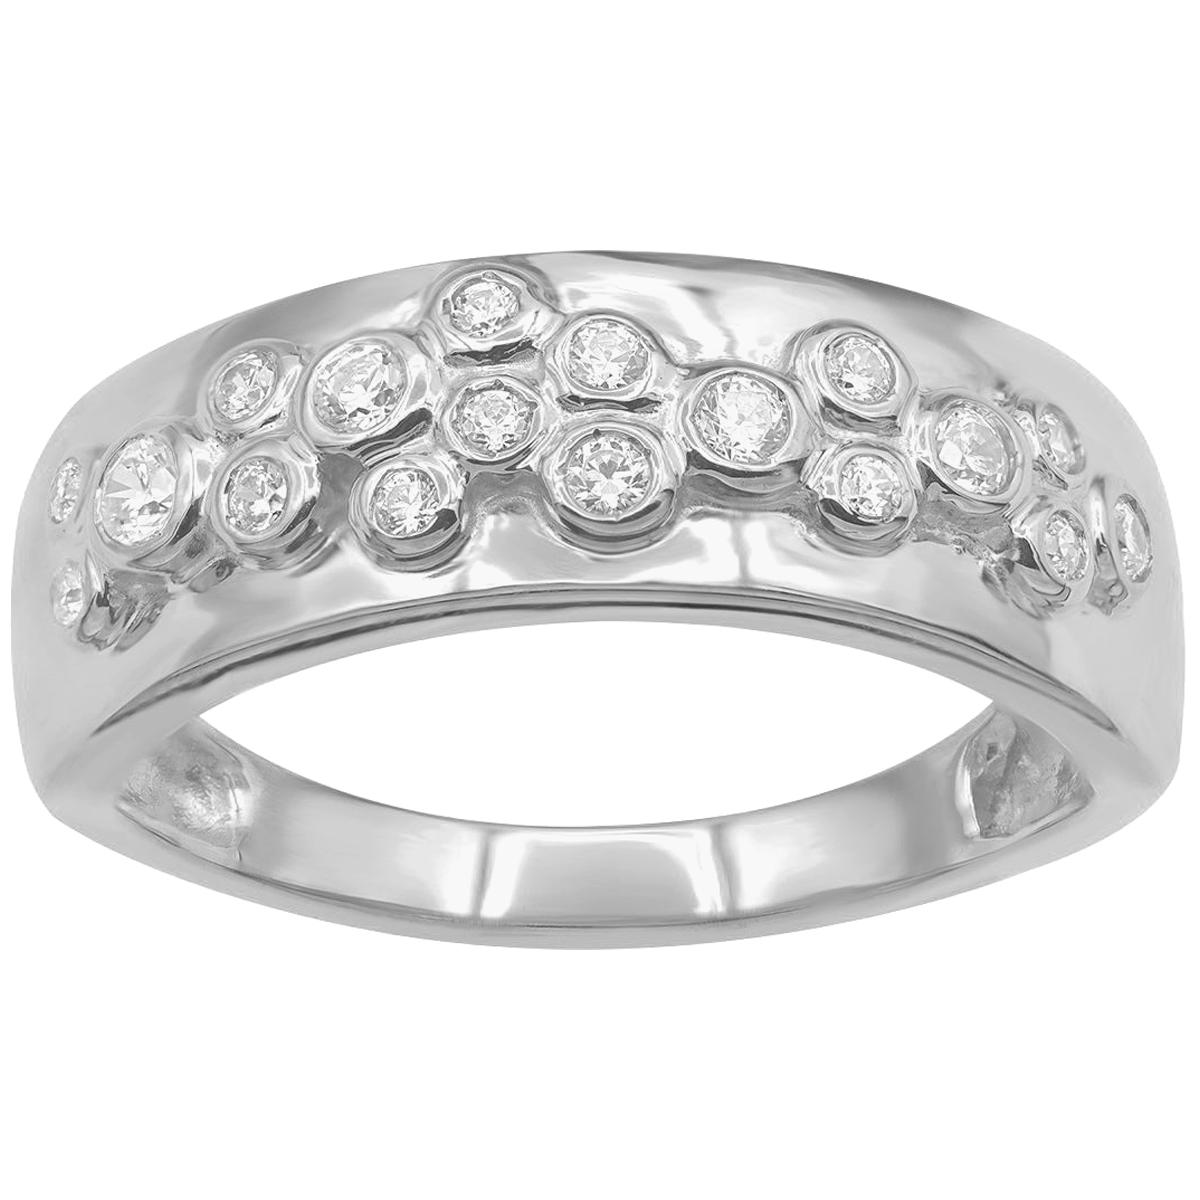 TJD 0.25 Carat Round Diamond 14KT White Gold Bezel Set Wedding Band Ring